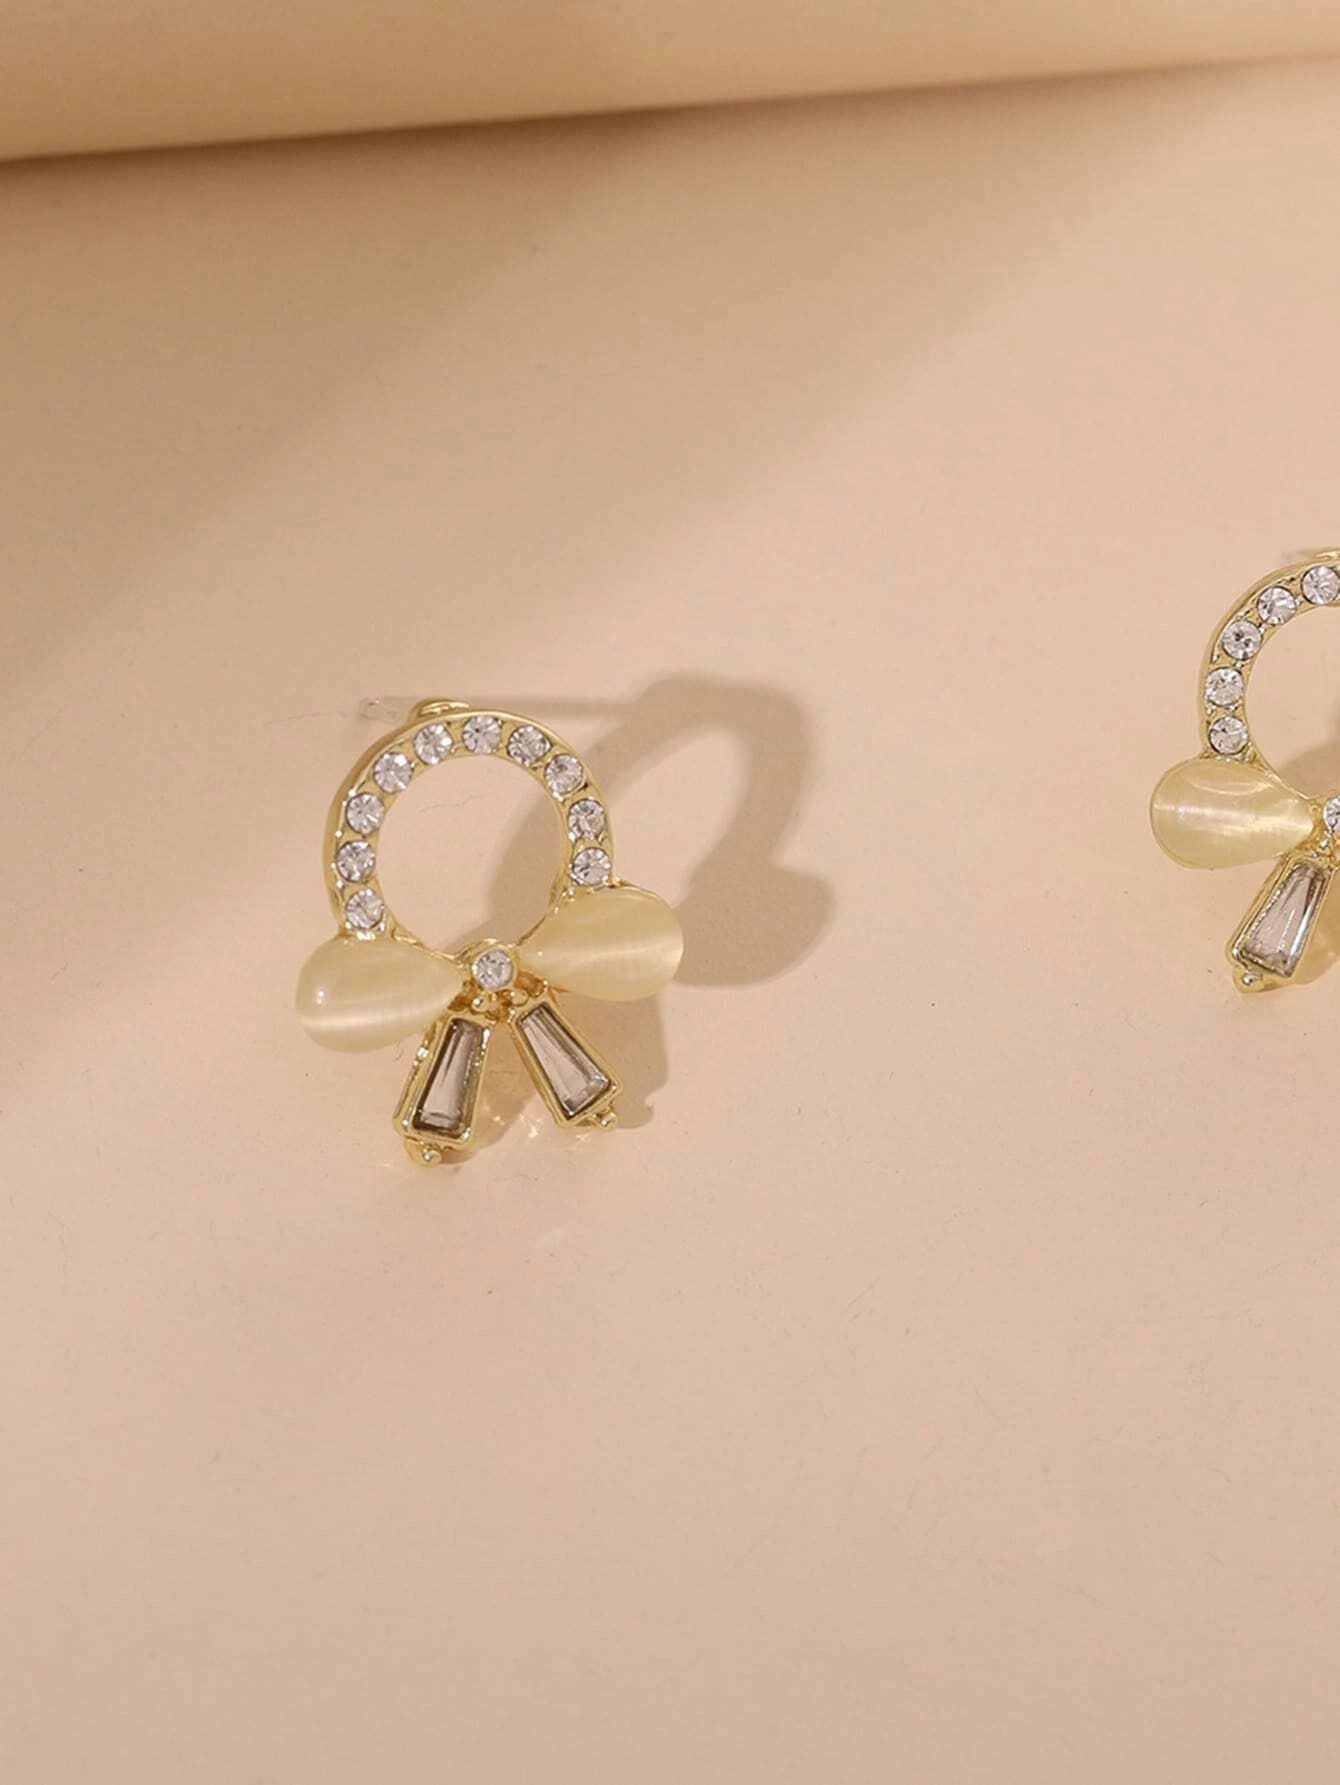 Rhinestone & Bow Design Stud Earrings - HDJ 196